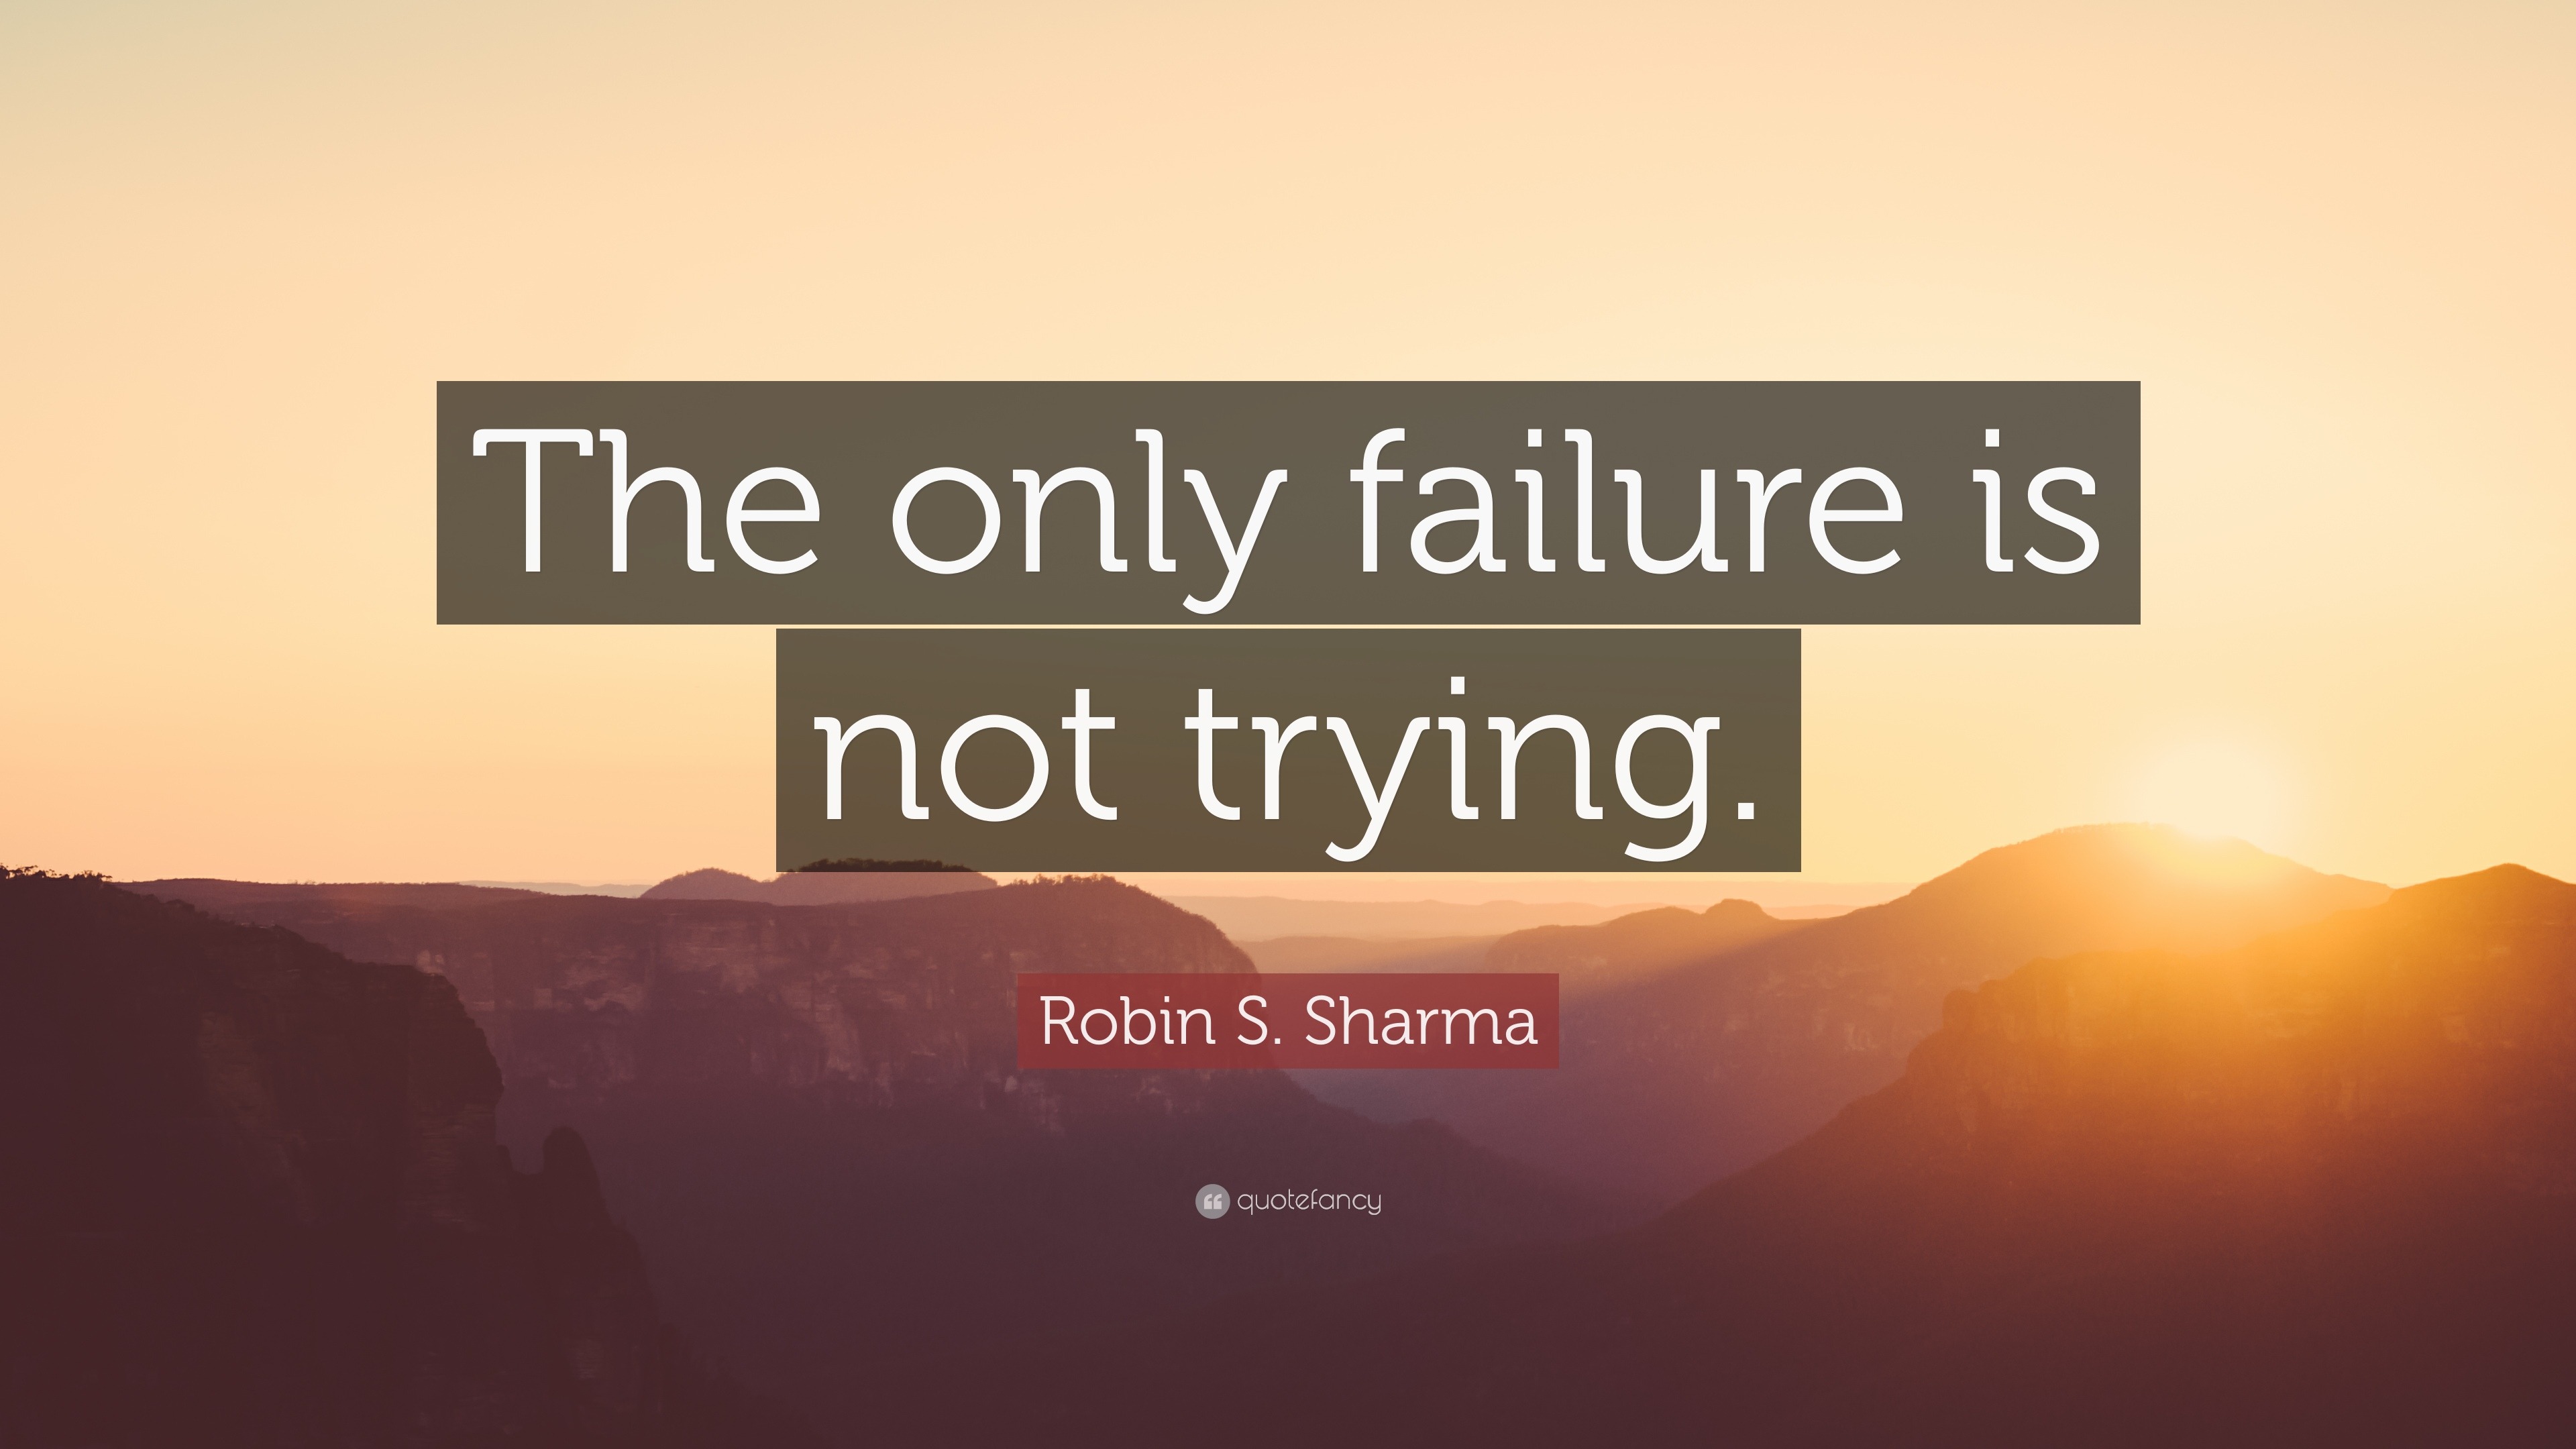 Robin S. Sharma Quote: 